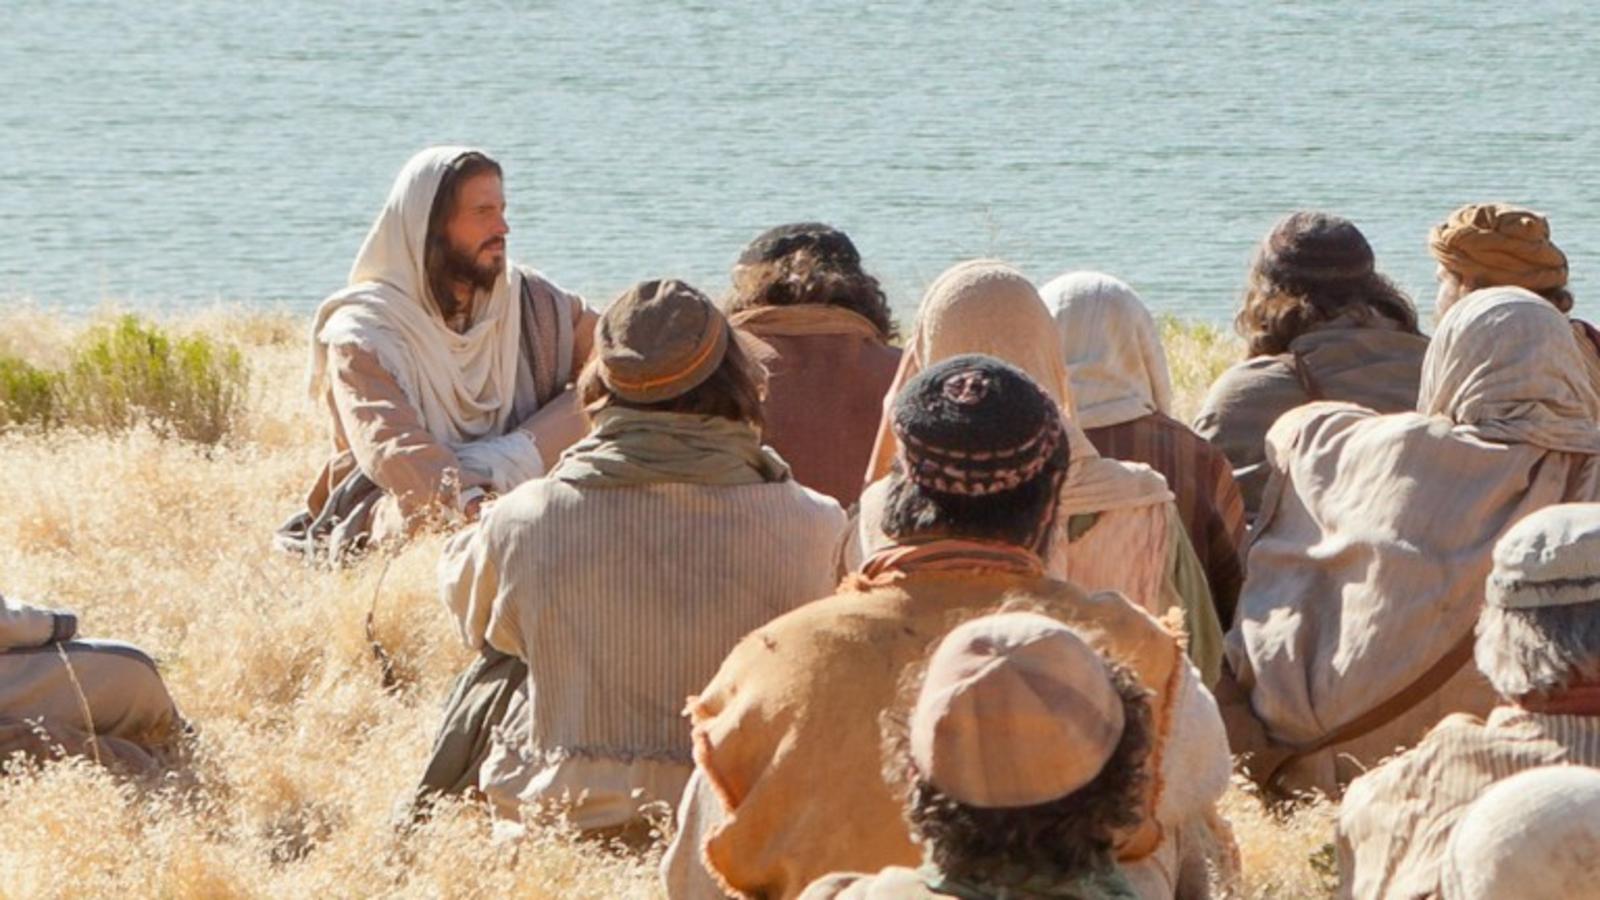 Listen to Jesus Who Has All Authority – Matt. 8-12